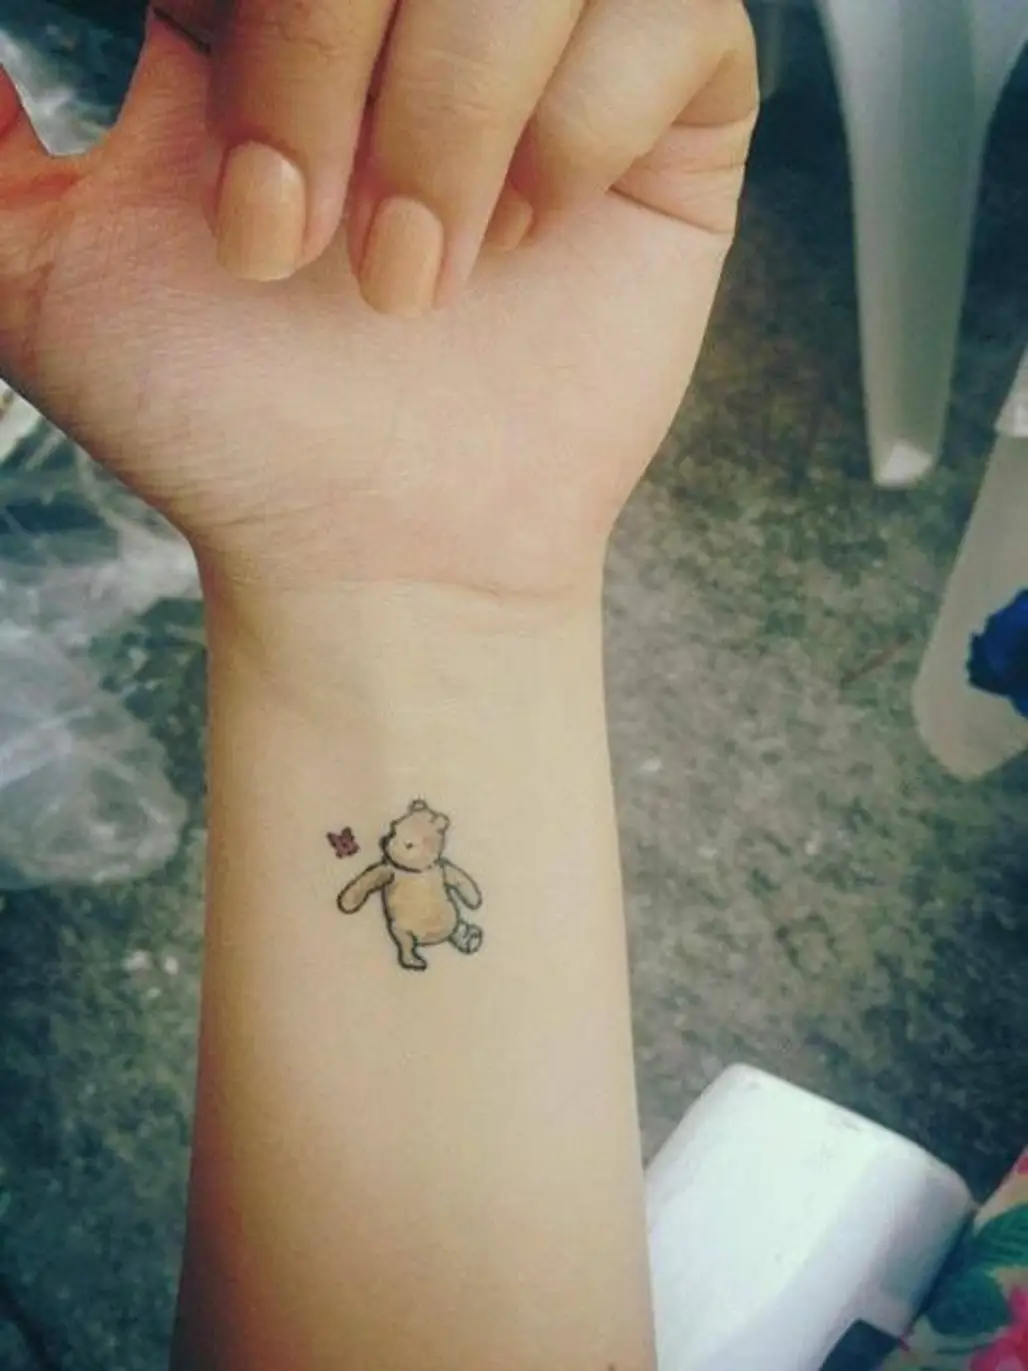 tattoo,blue,finger,leg,arm,